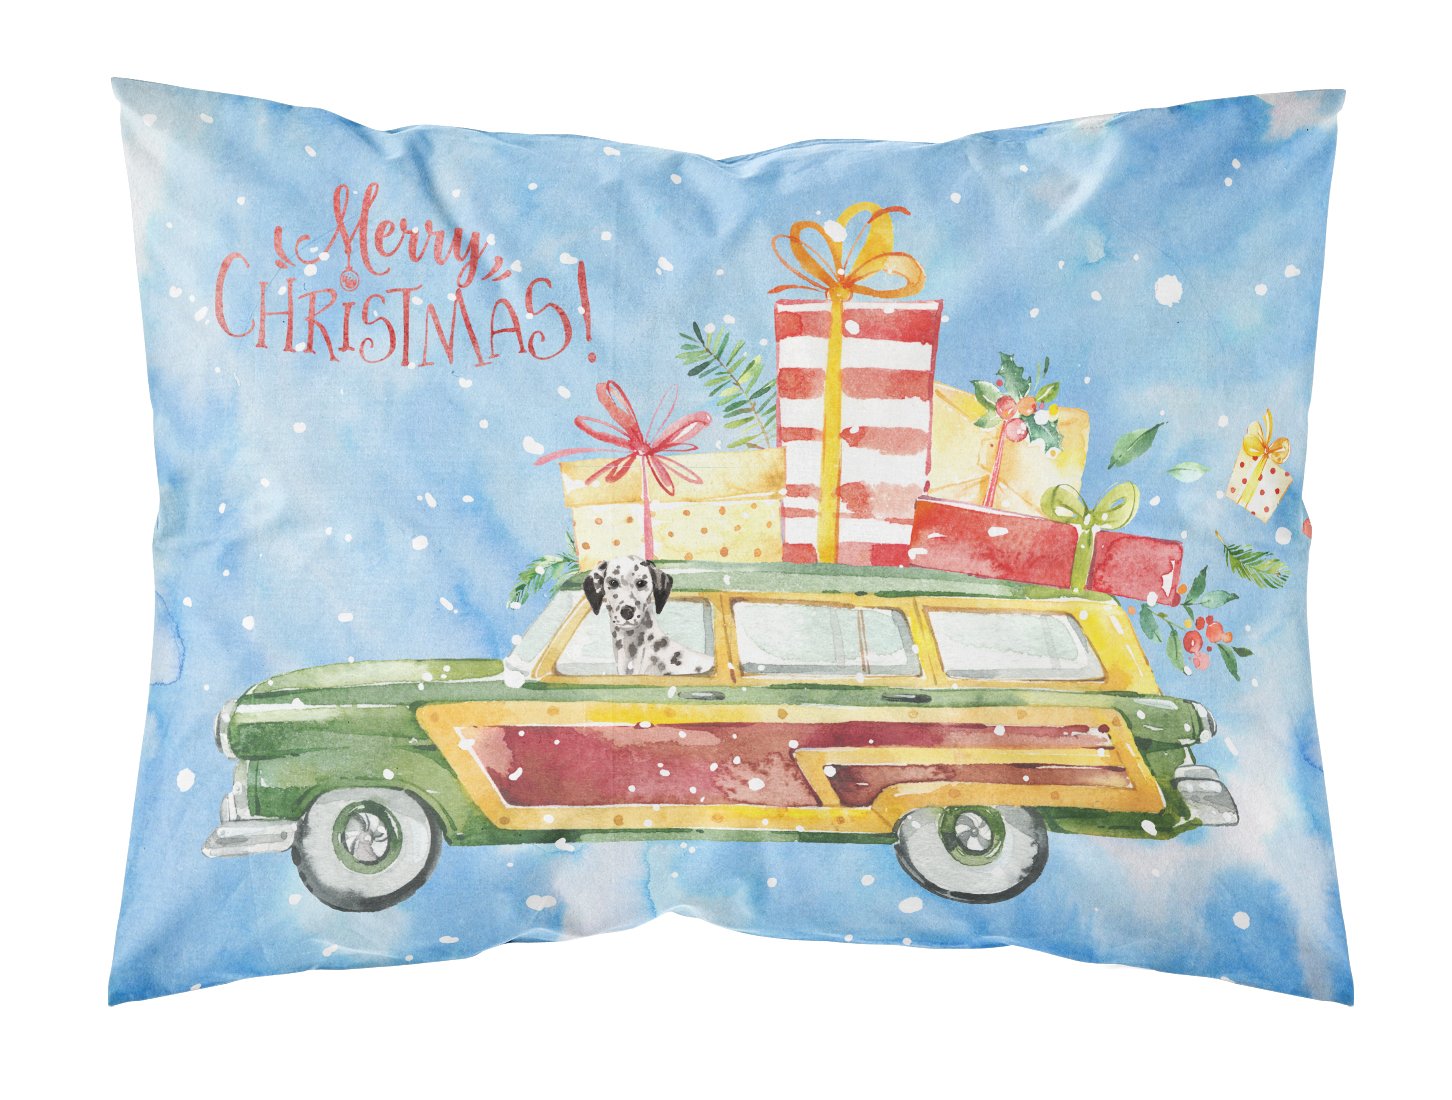 Merry Christmas Dalmatian Fabric Standard Pillowcase CK2452PILLOWCASE by Caroline's Treasures